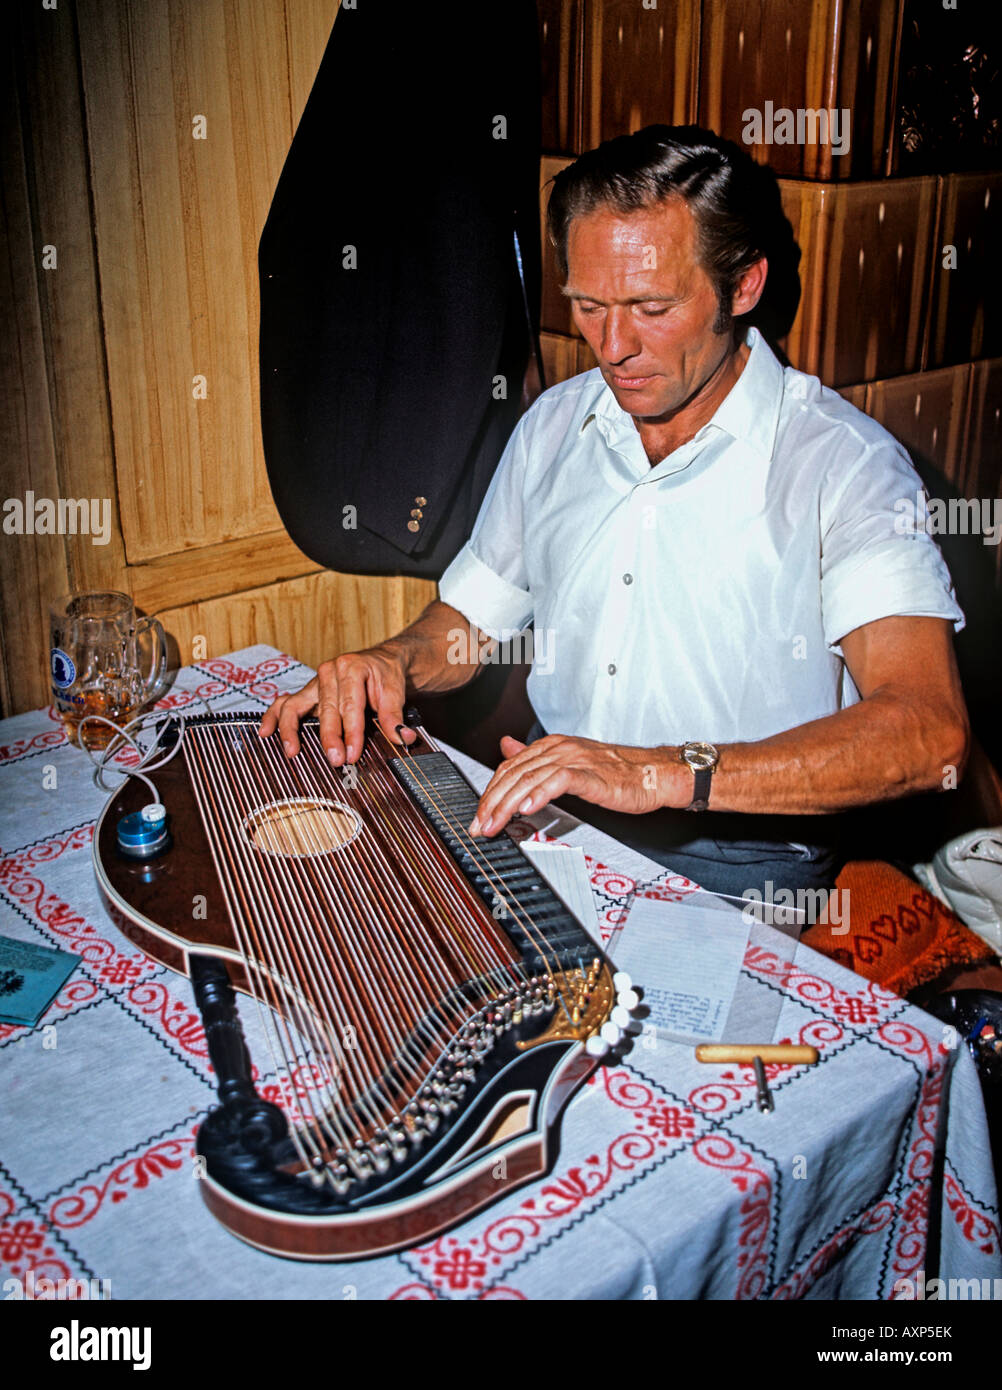 0419 musica tirolese in Austria Foto stock - Alamy